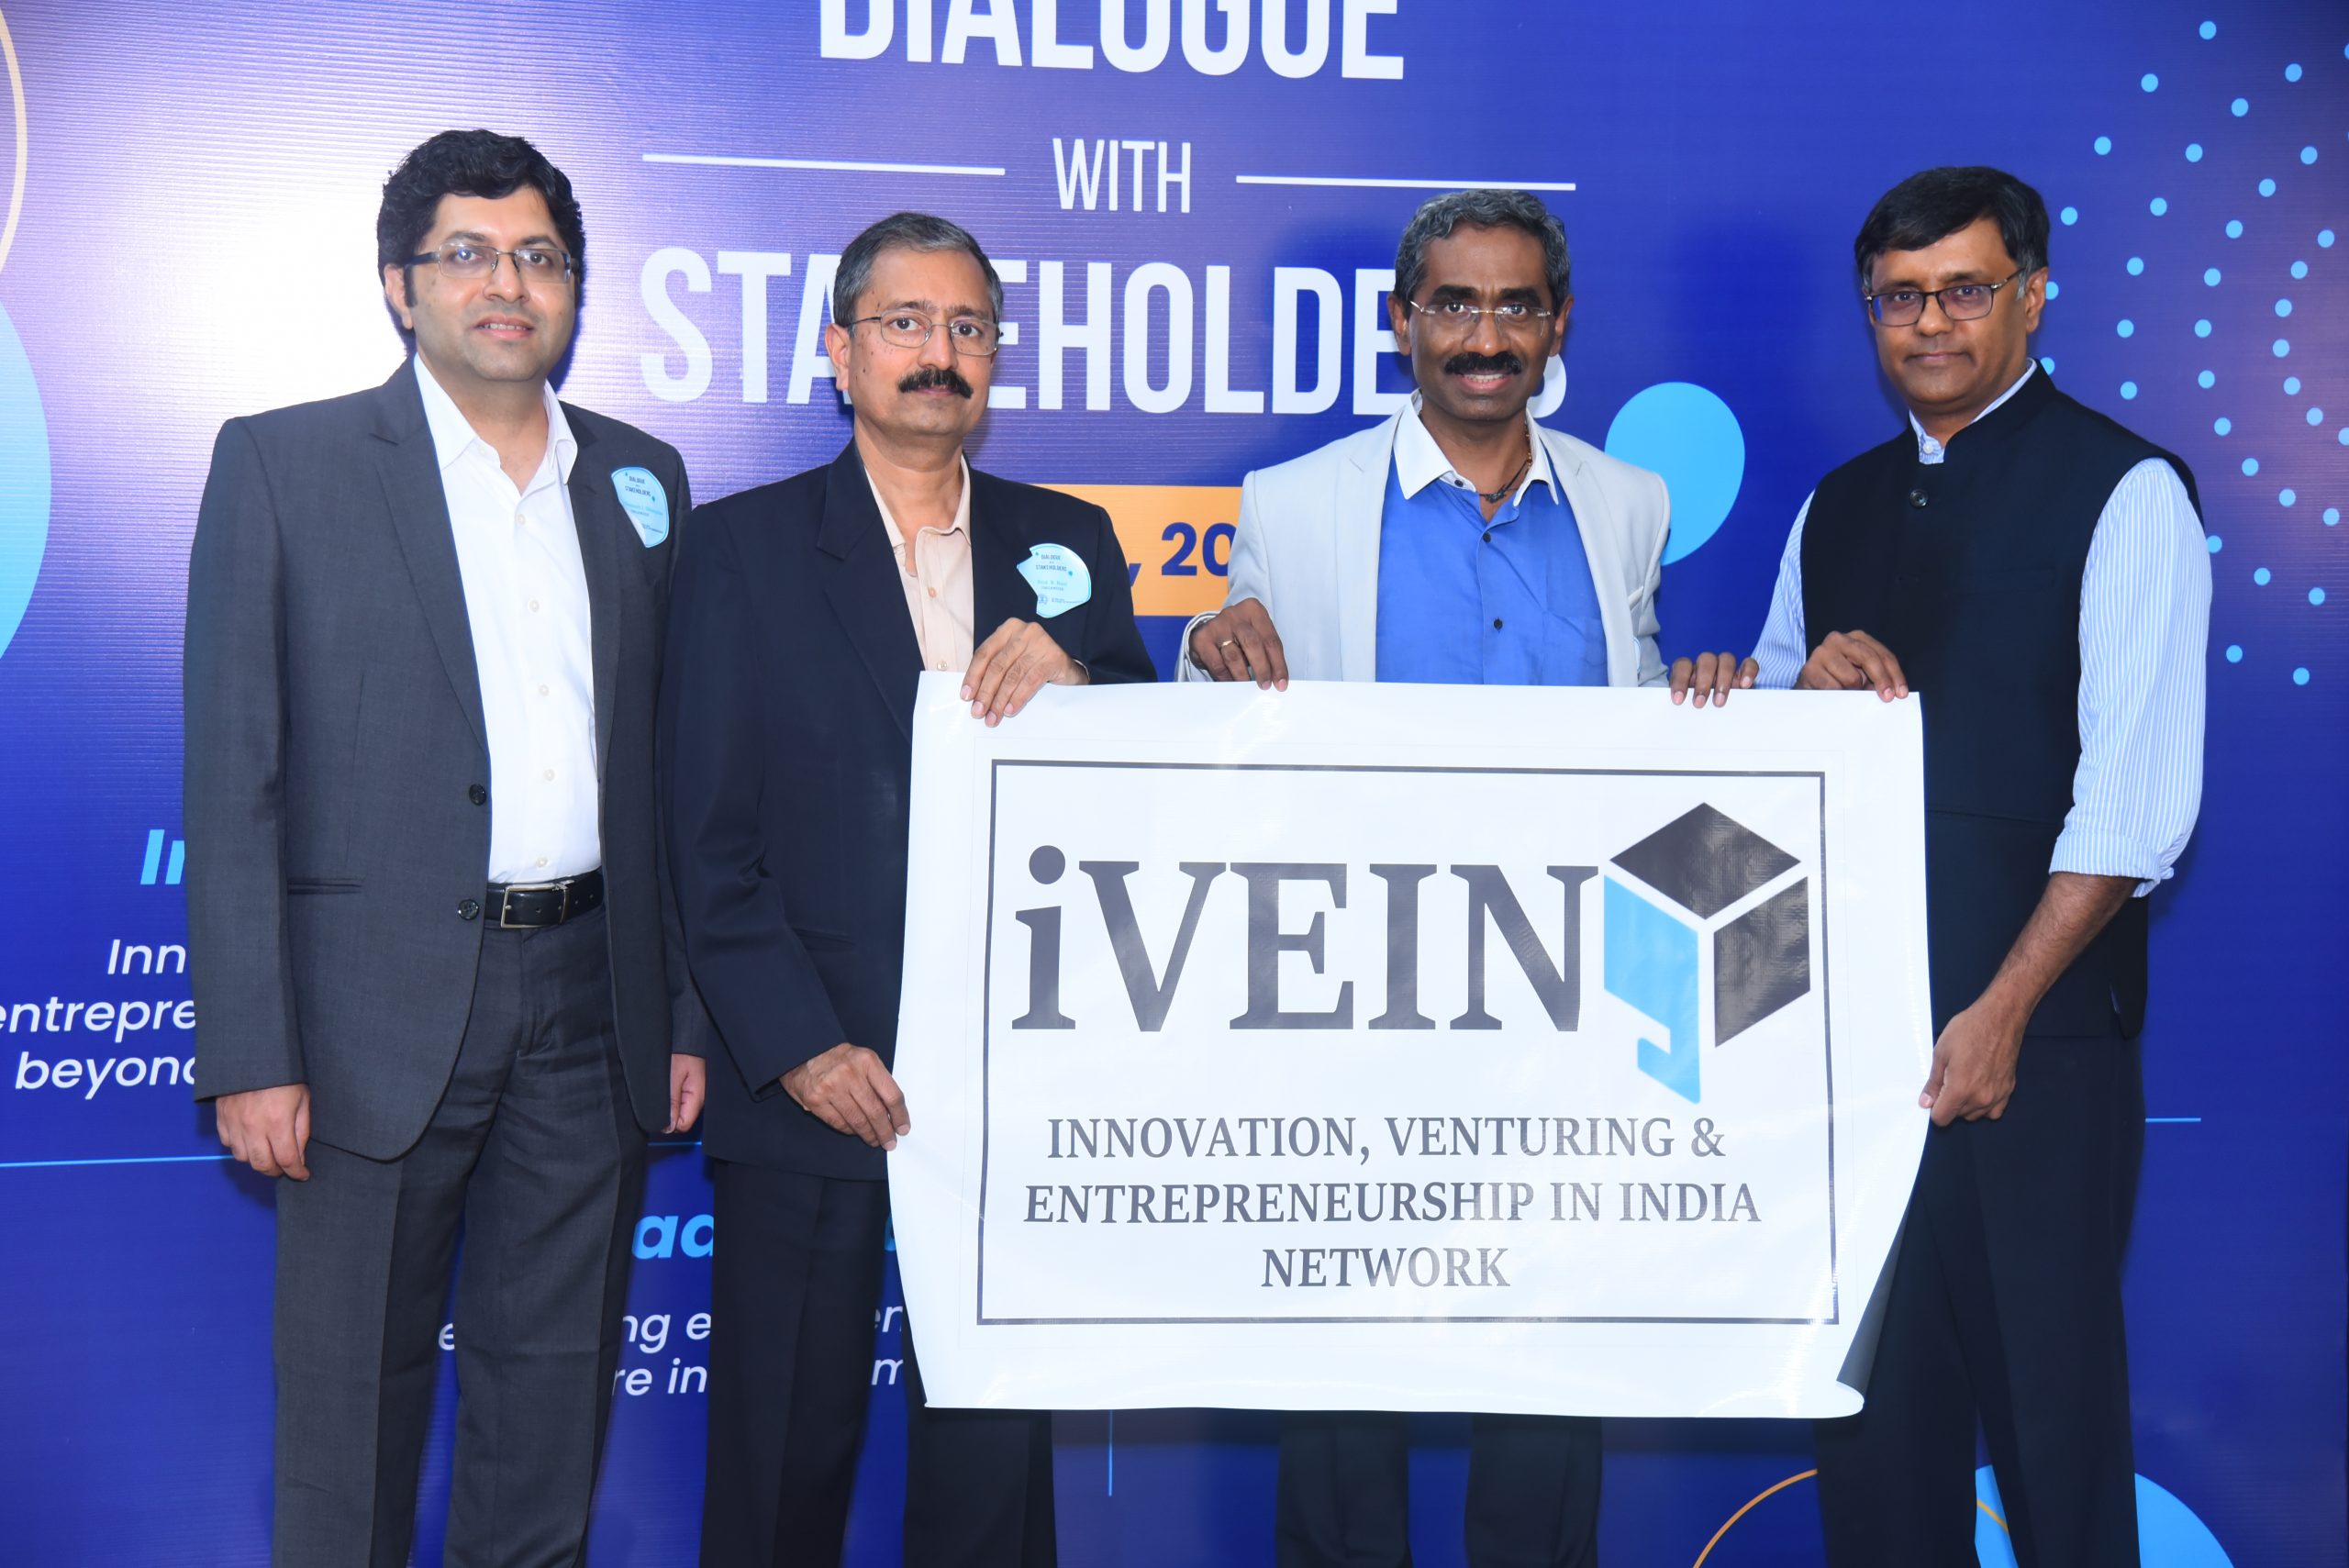 Top IITs and IIMs launch Consortium to boost Indian Entrepreneurship Ecosystem